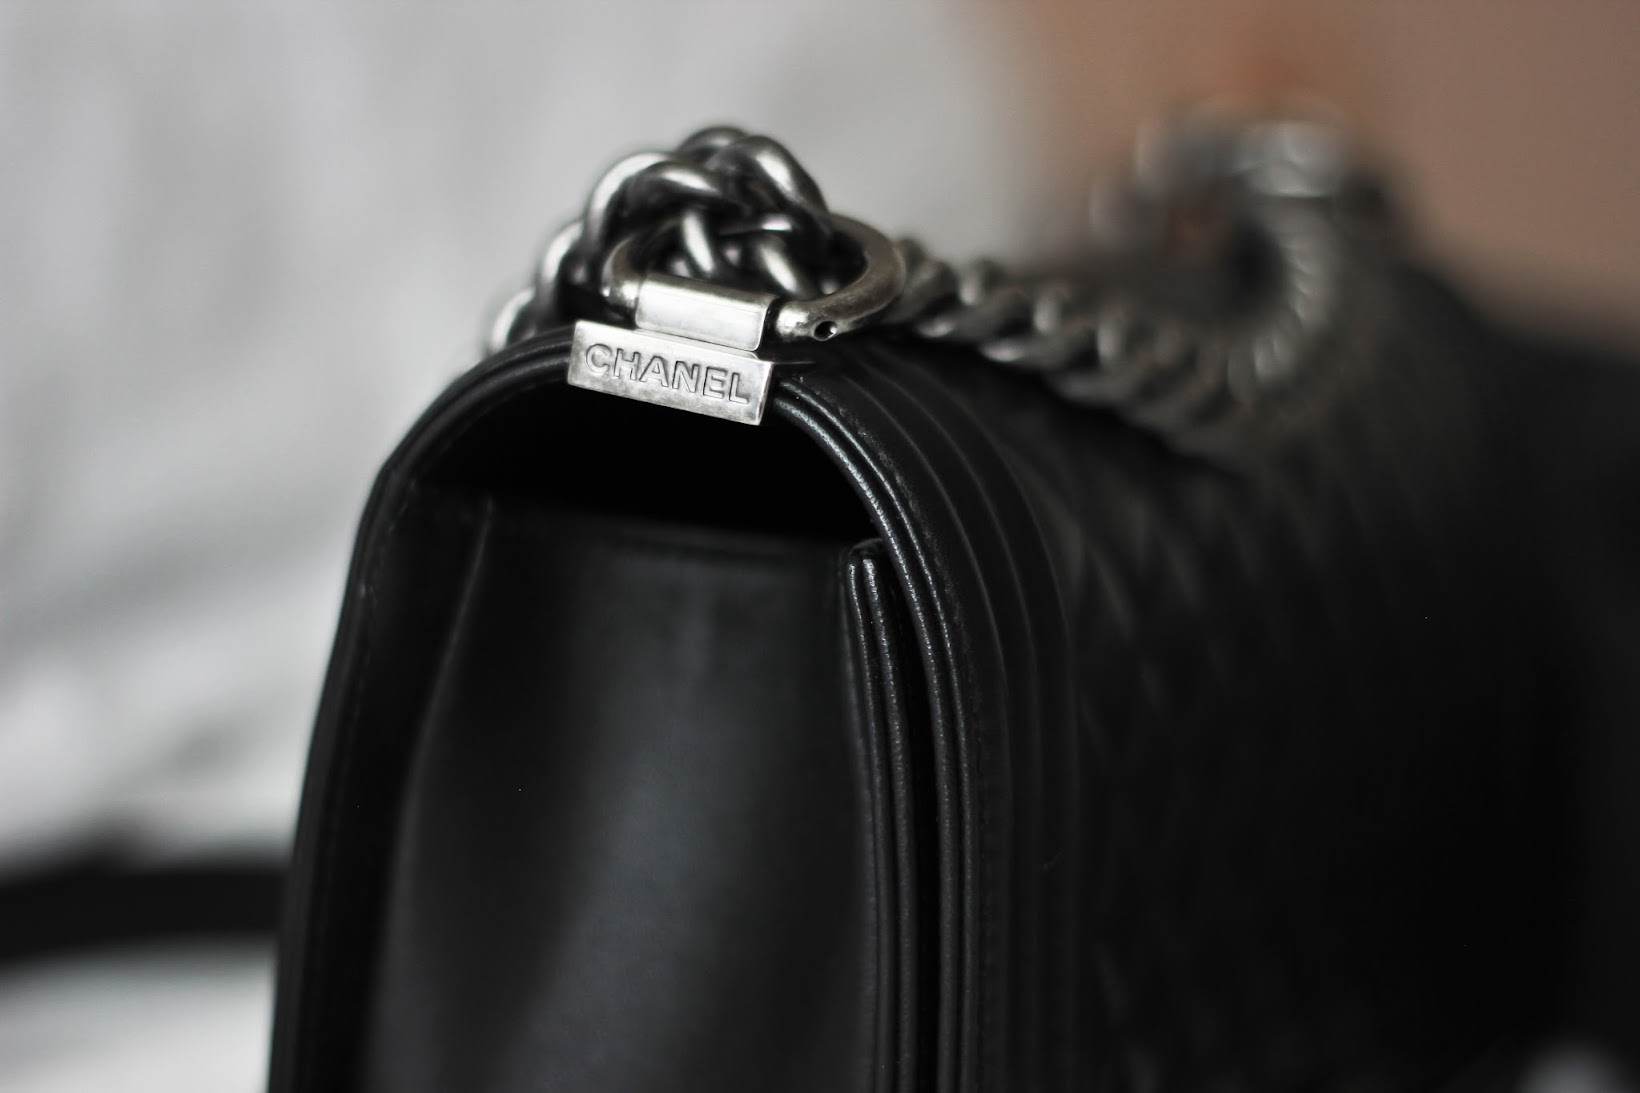 Chanel Boy Bag: Old Medium versus New Medium - Spotted Fashion